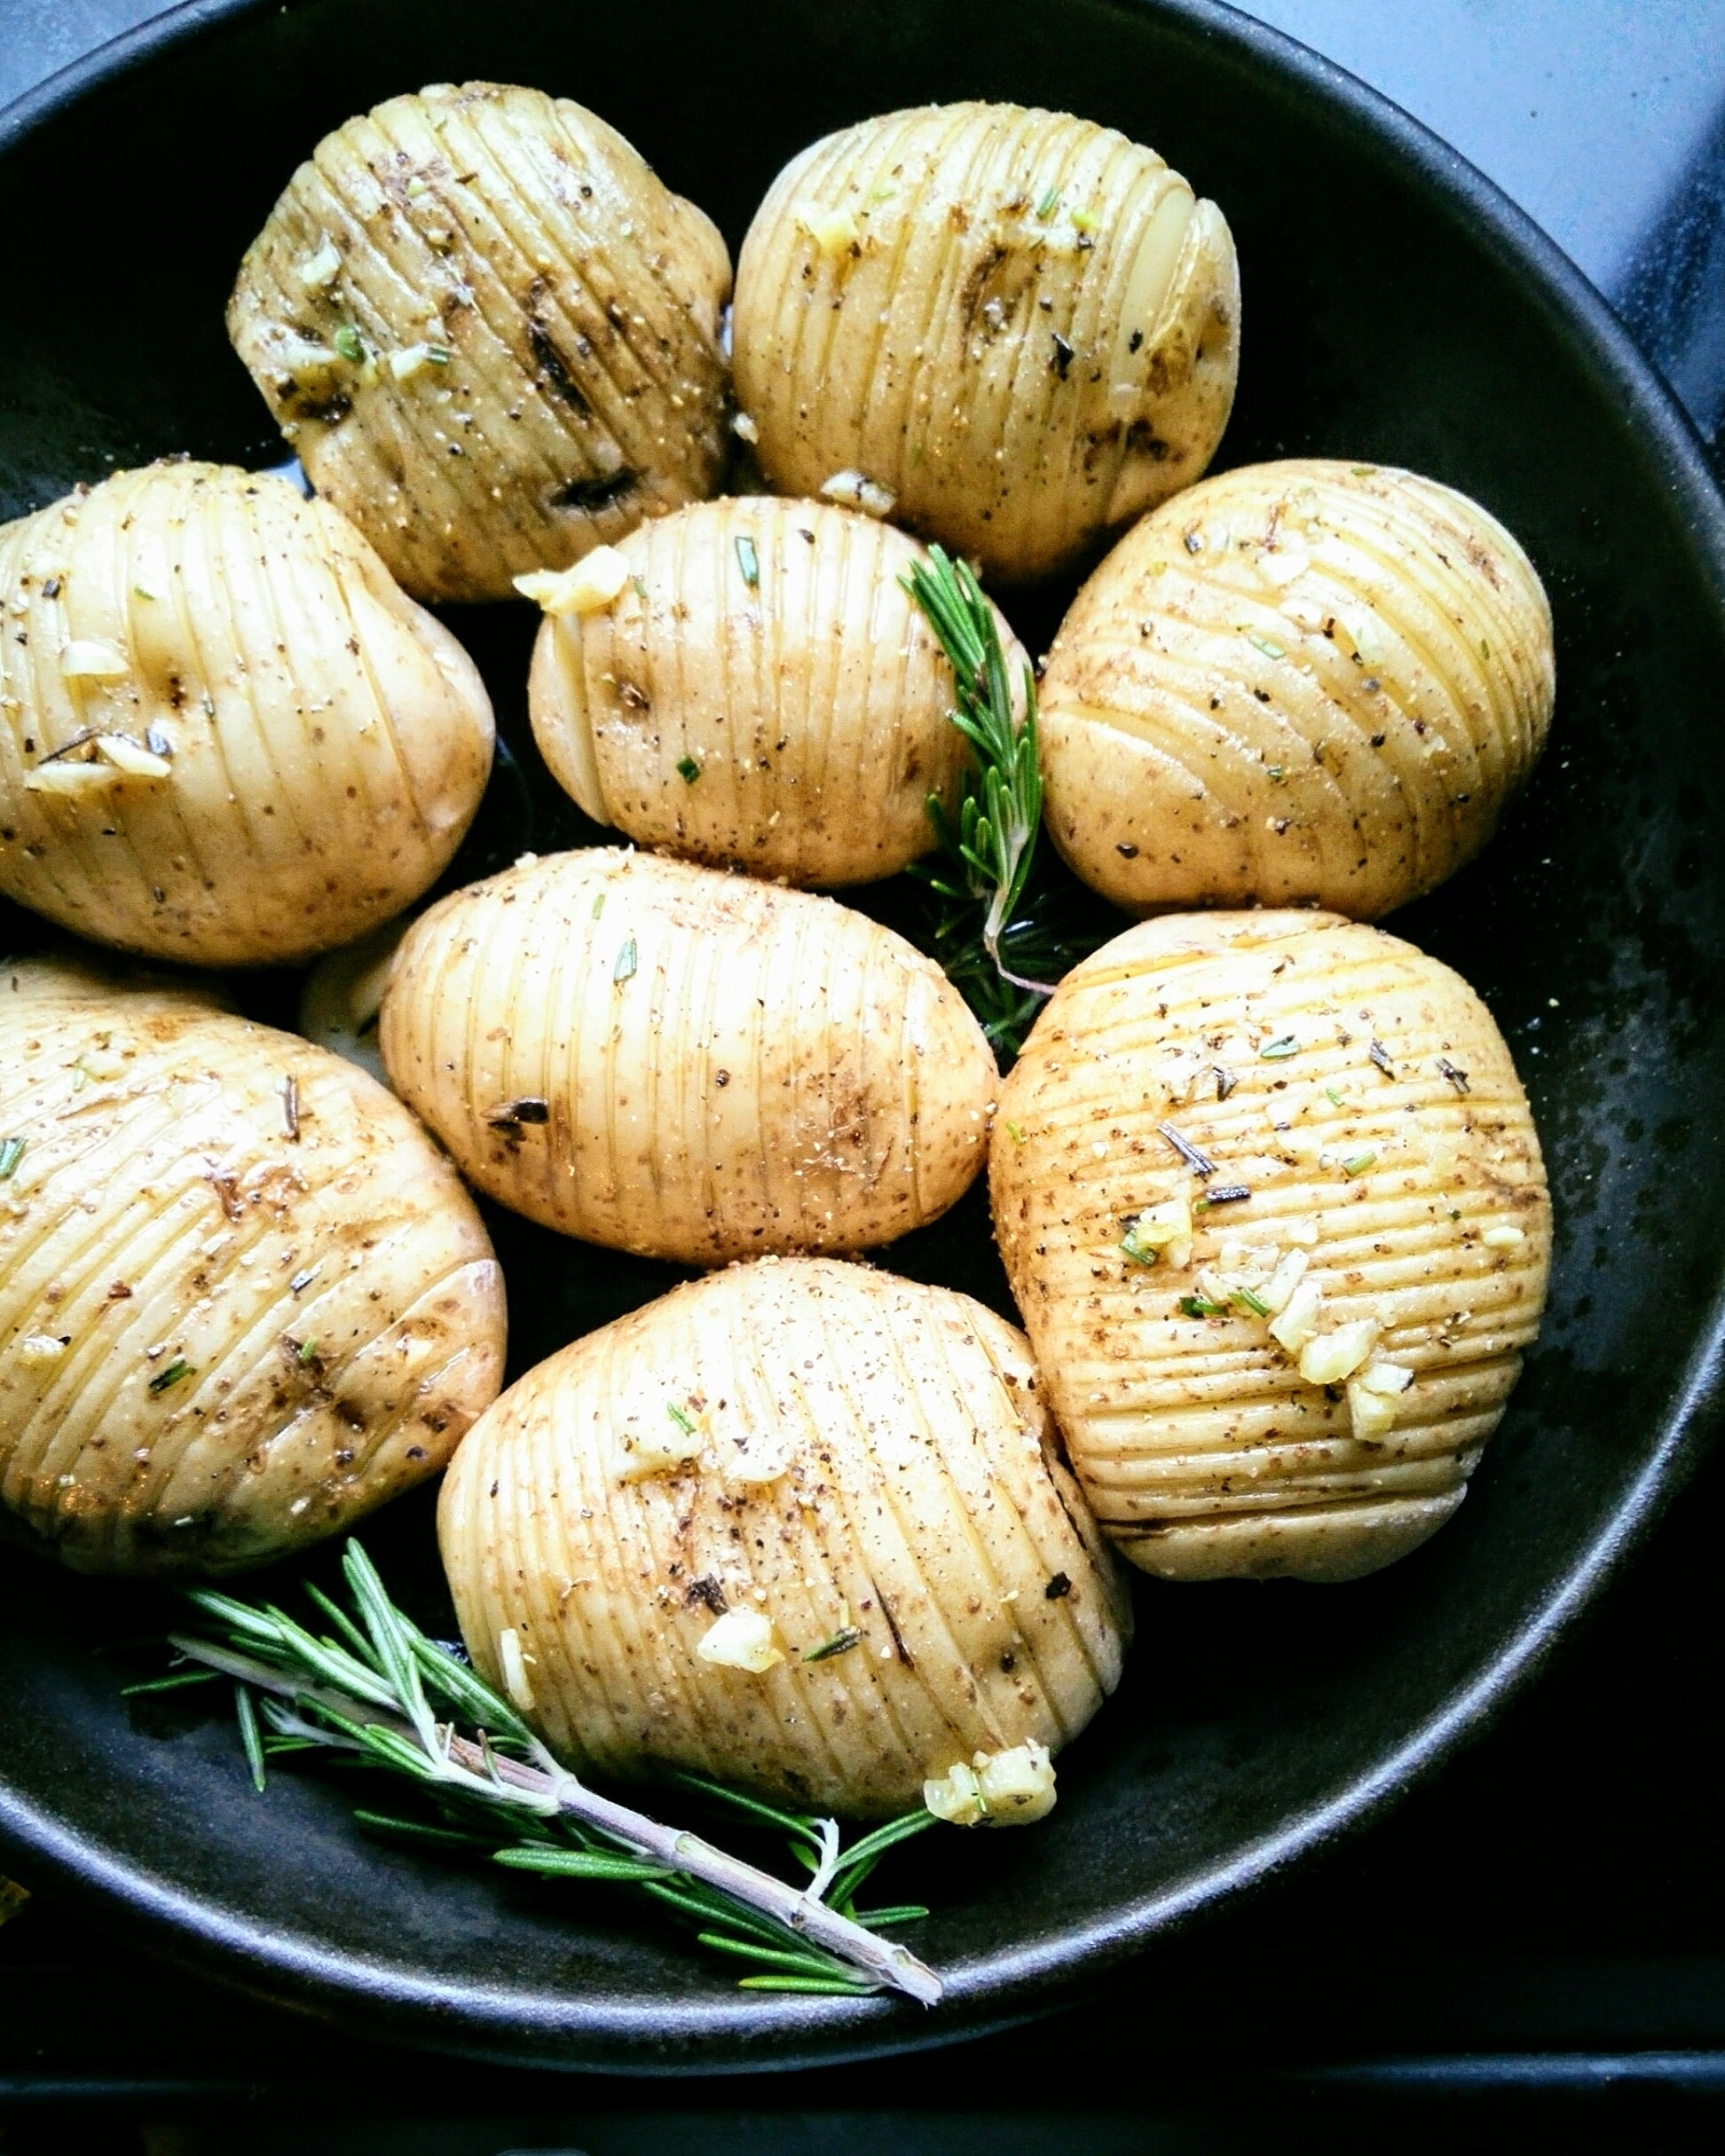 hasselback baked potatoes recipe with garlic rosemary herbs olive oil salt pepper vegan gluten free vegetarian dairy free